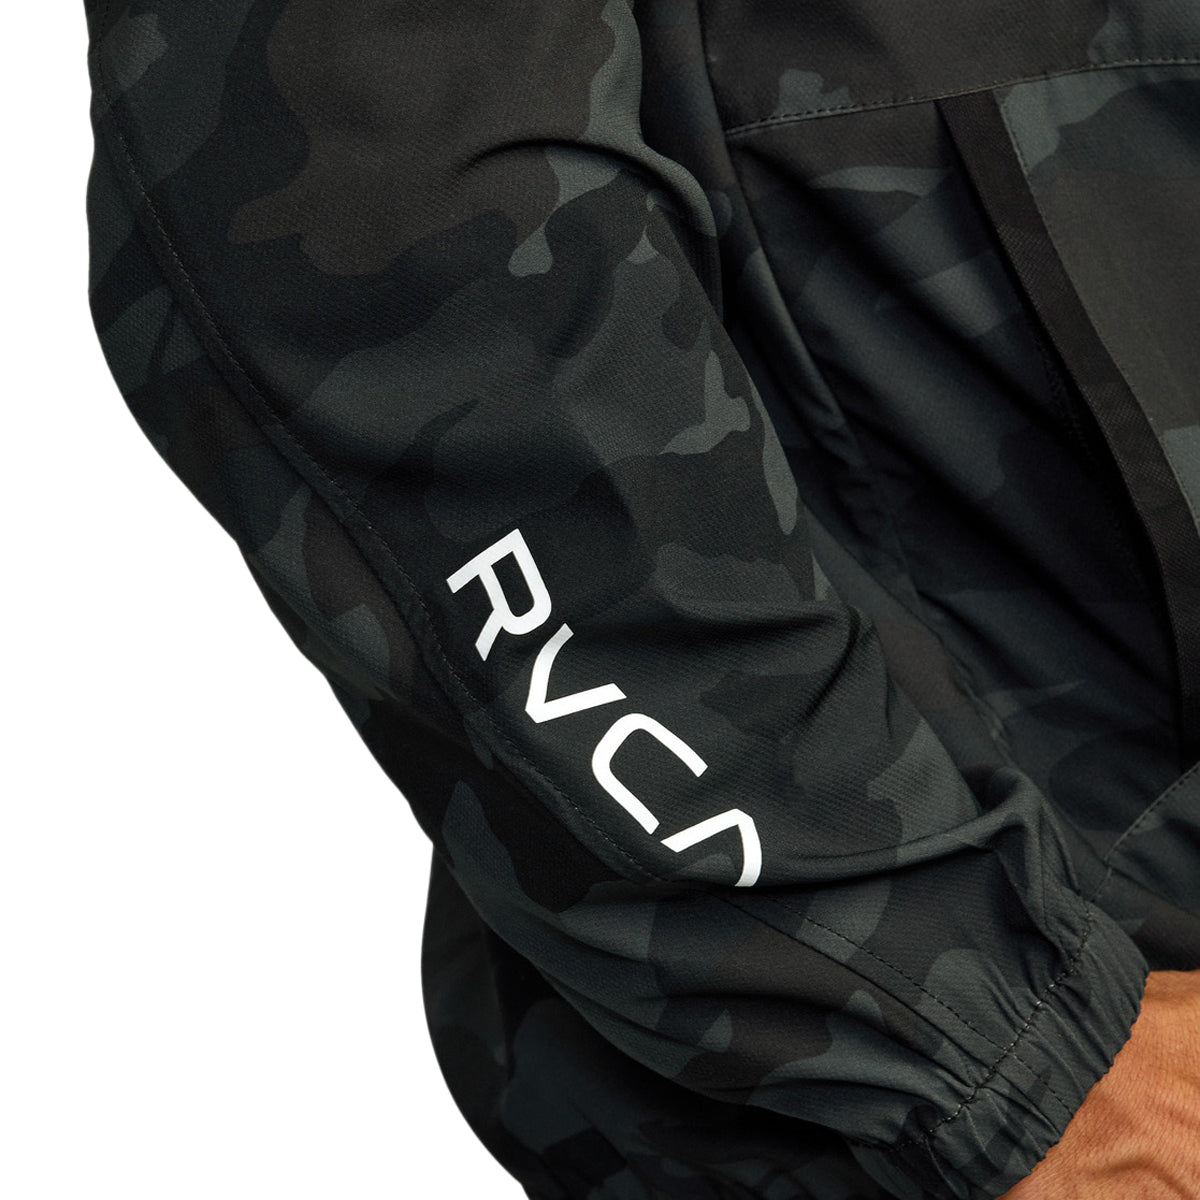 RVCA Yogger II Jacket - Camo image 4